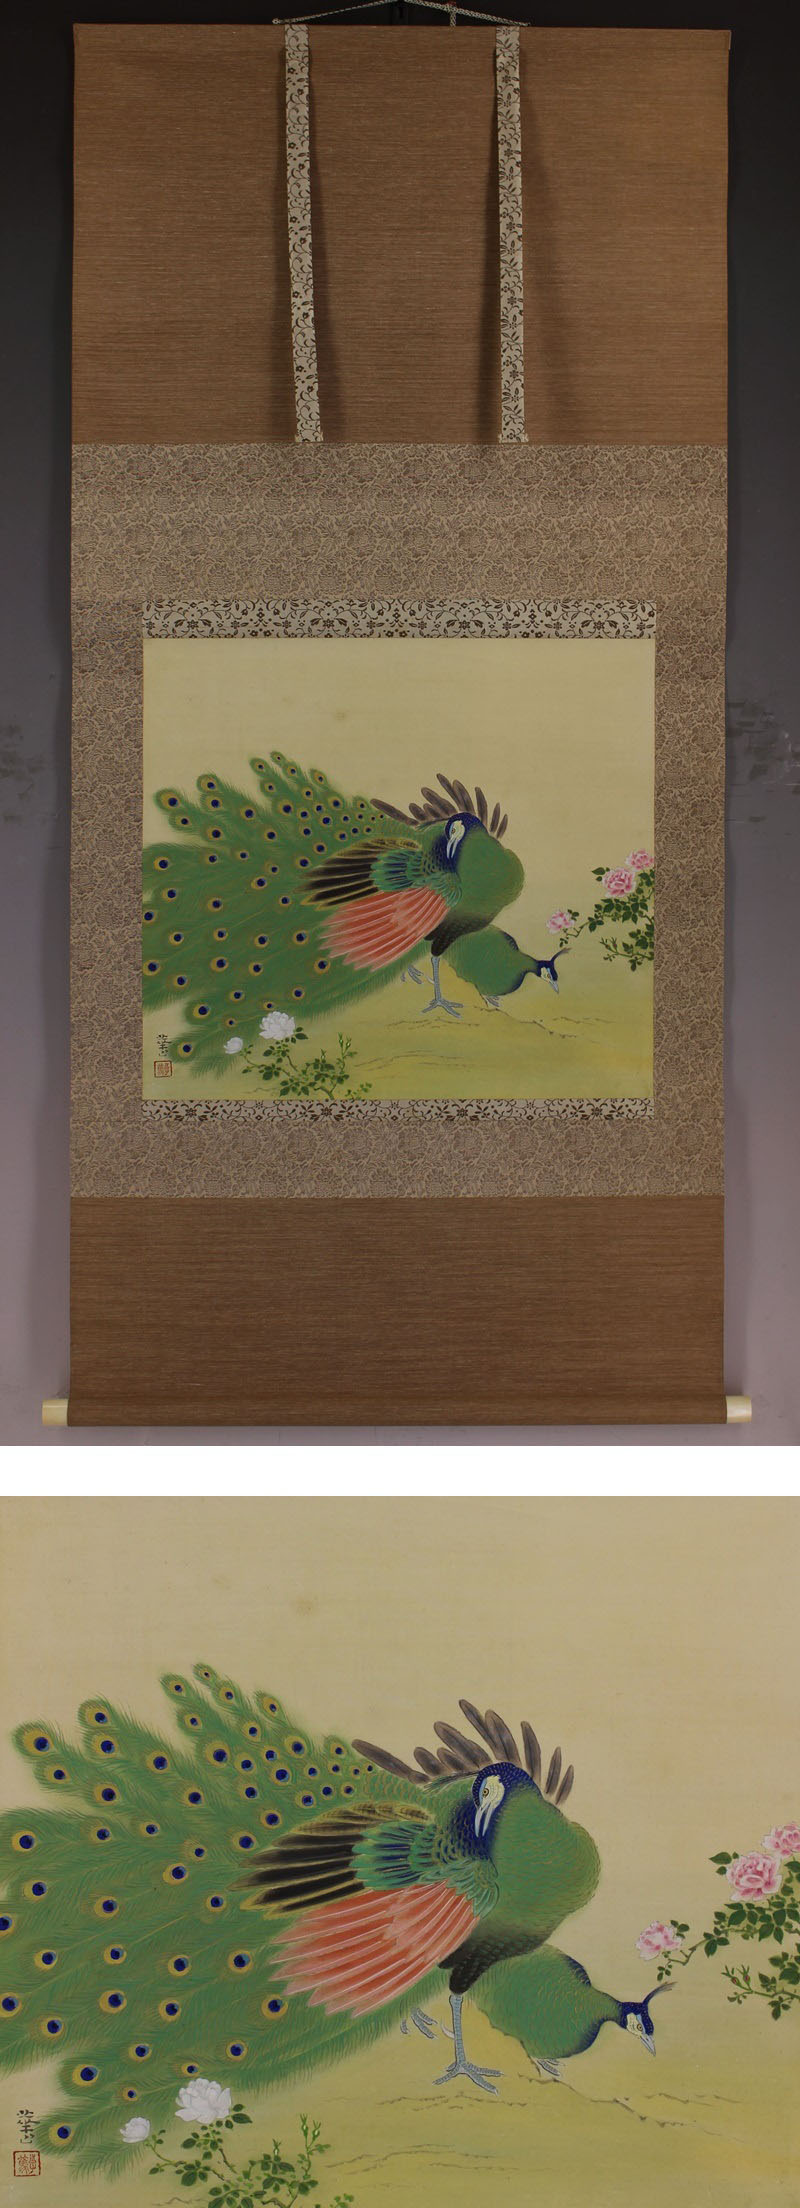 真作 芦渓 柳に鴬図 布袋屋掛軸HH-578 - 絵画